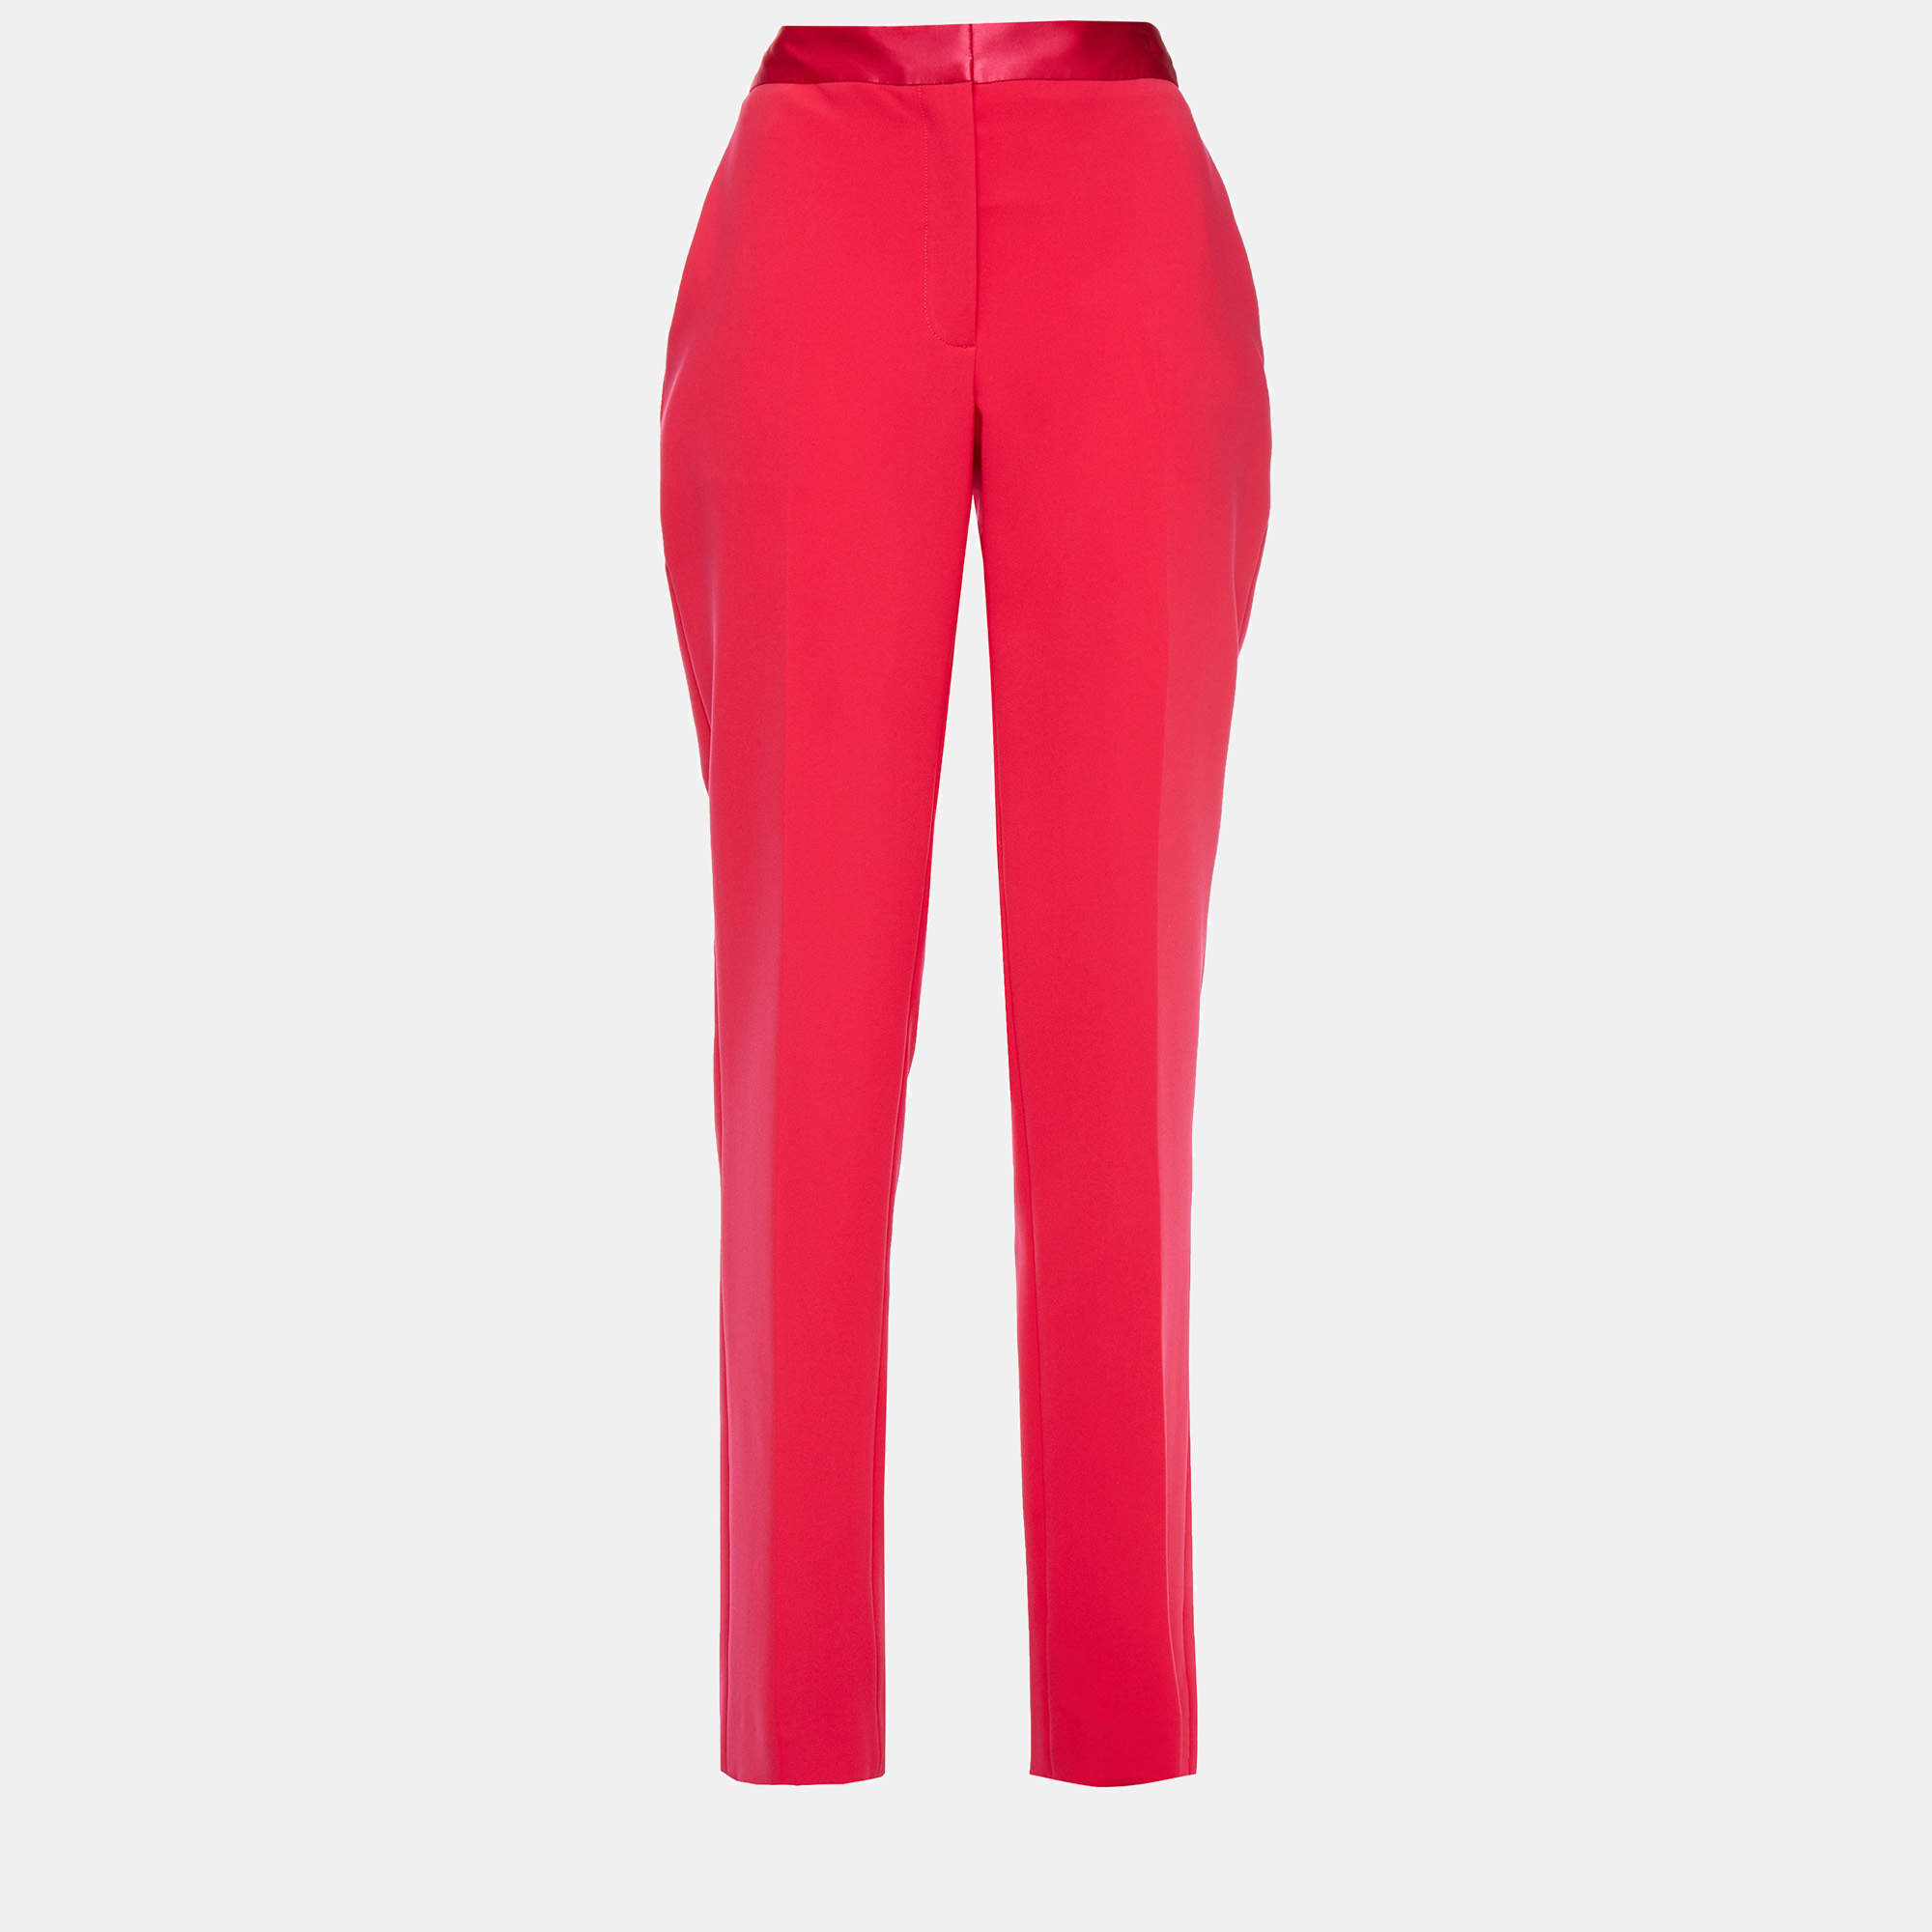 Carolina Herrera Hot Pink Crepe Straight Leg Pants L (US 12)